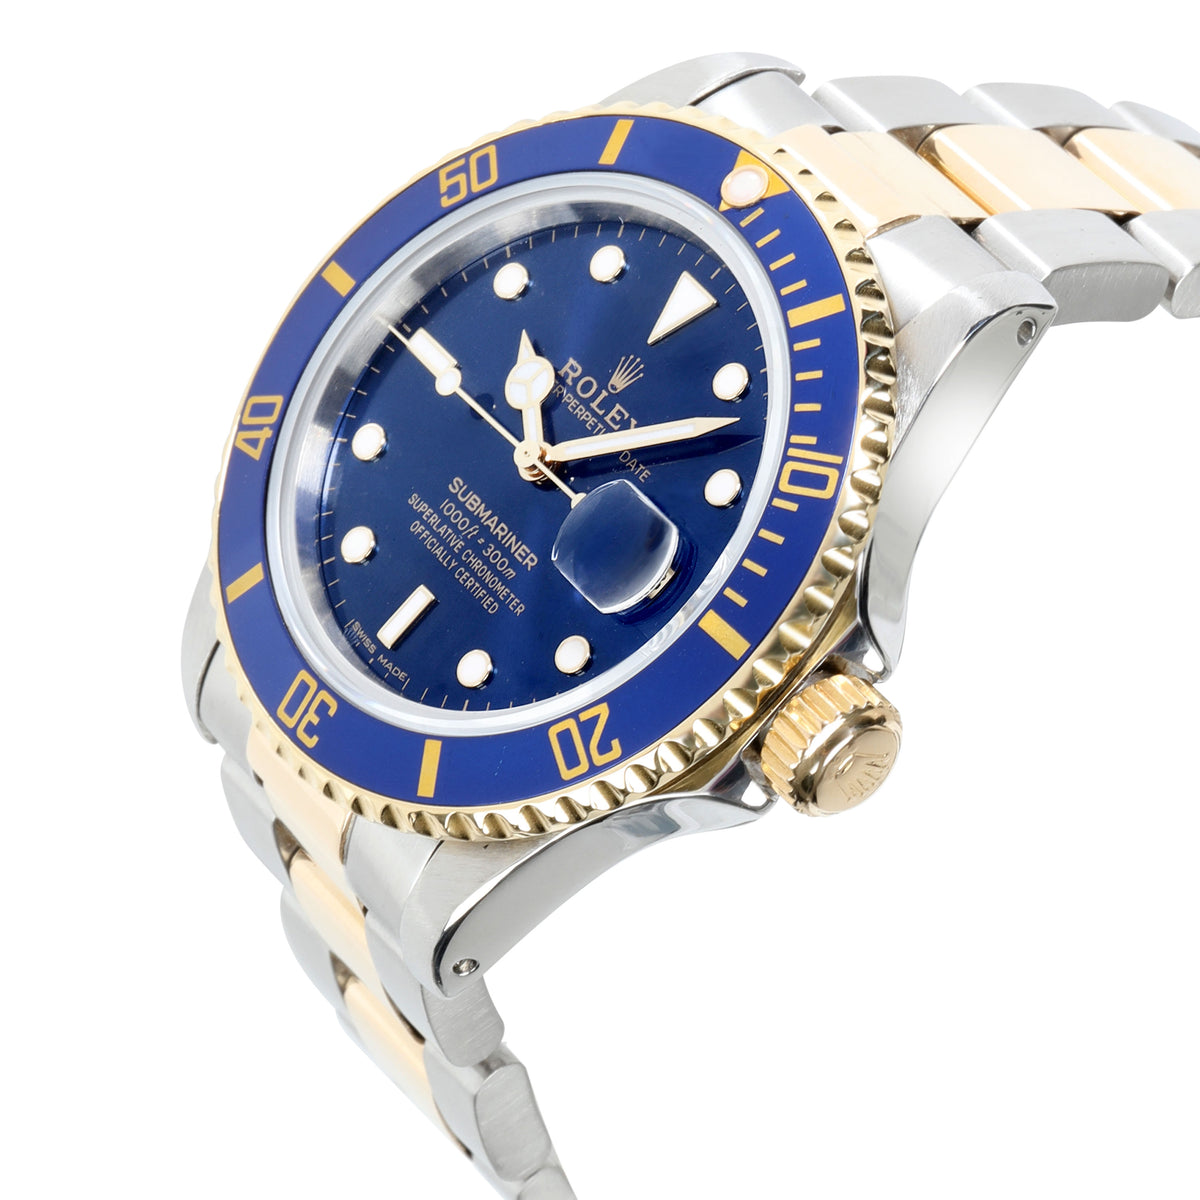 Rolex Submariner 16803 Men's Watch in 18kt Stainless Steel/Yellow Gold